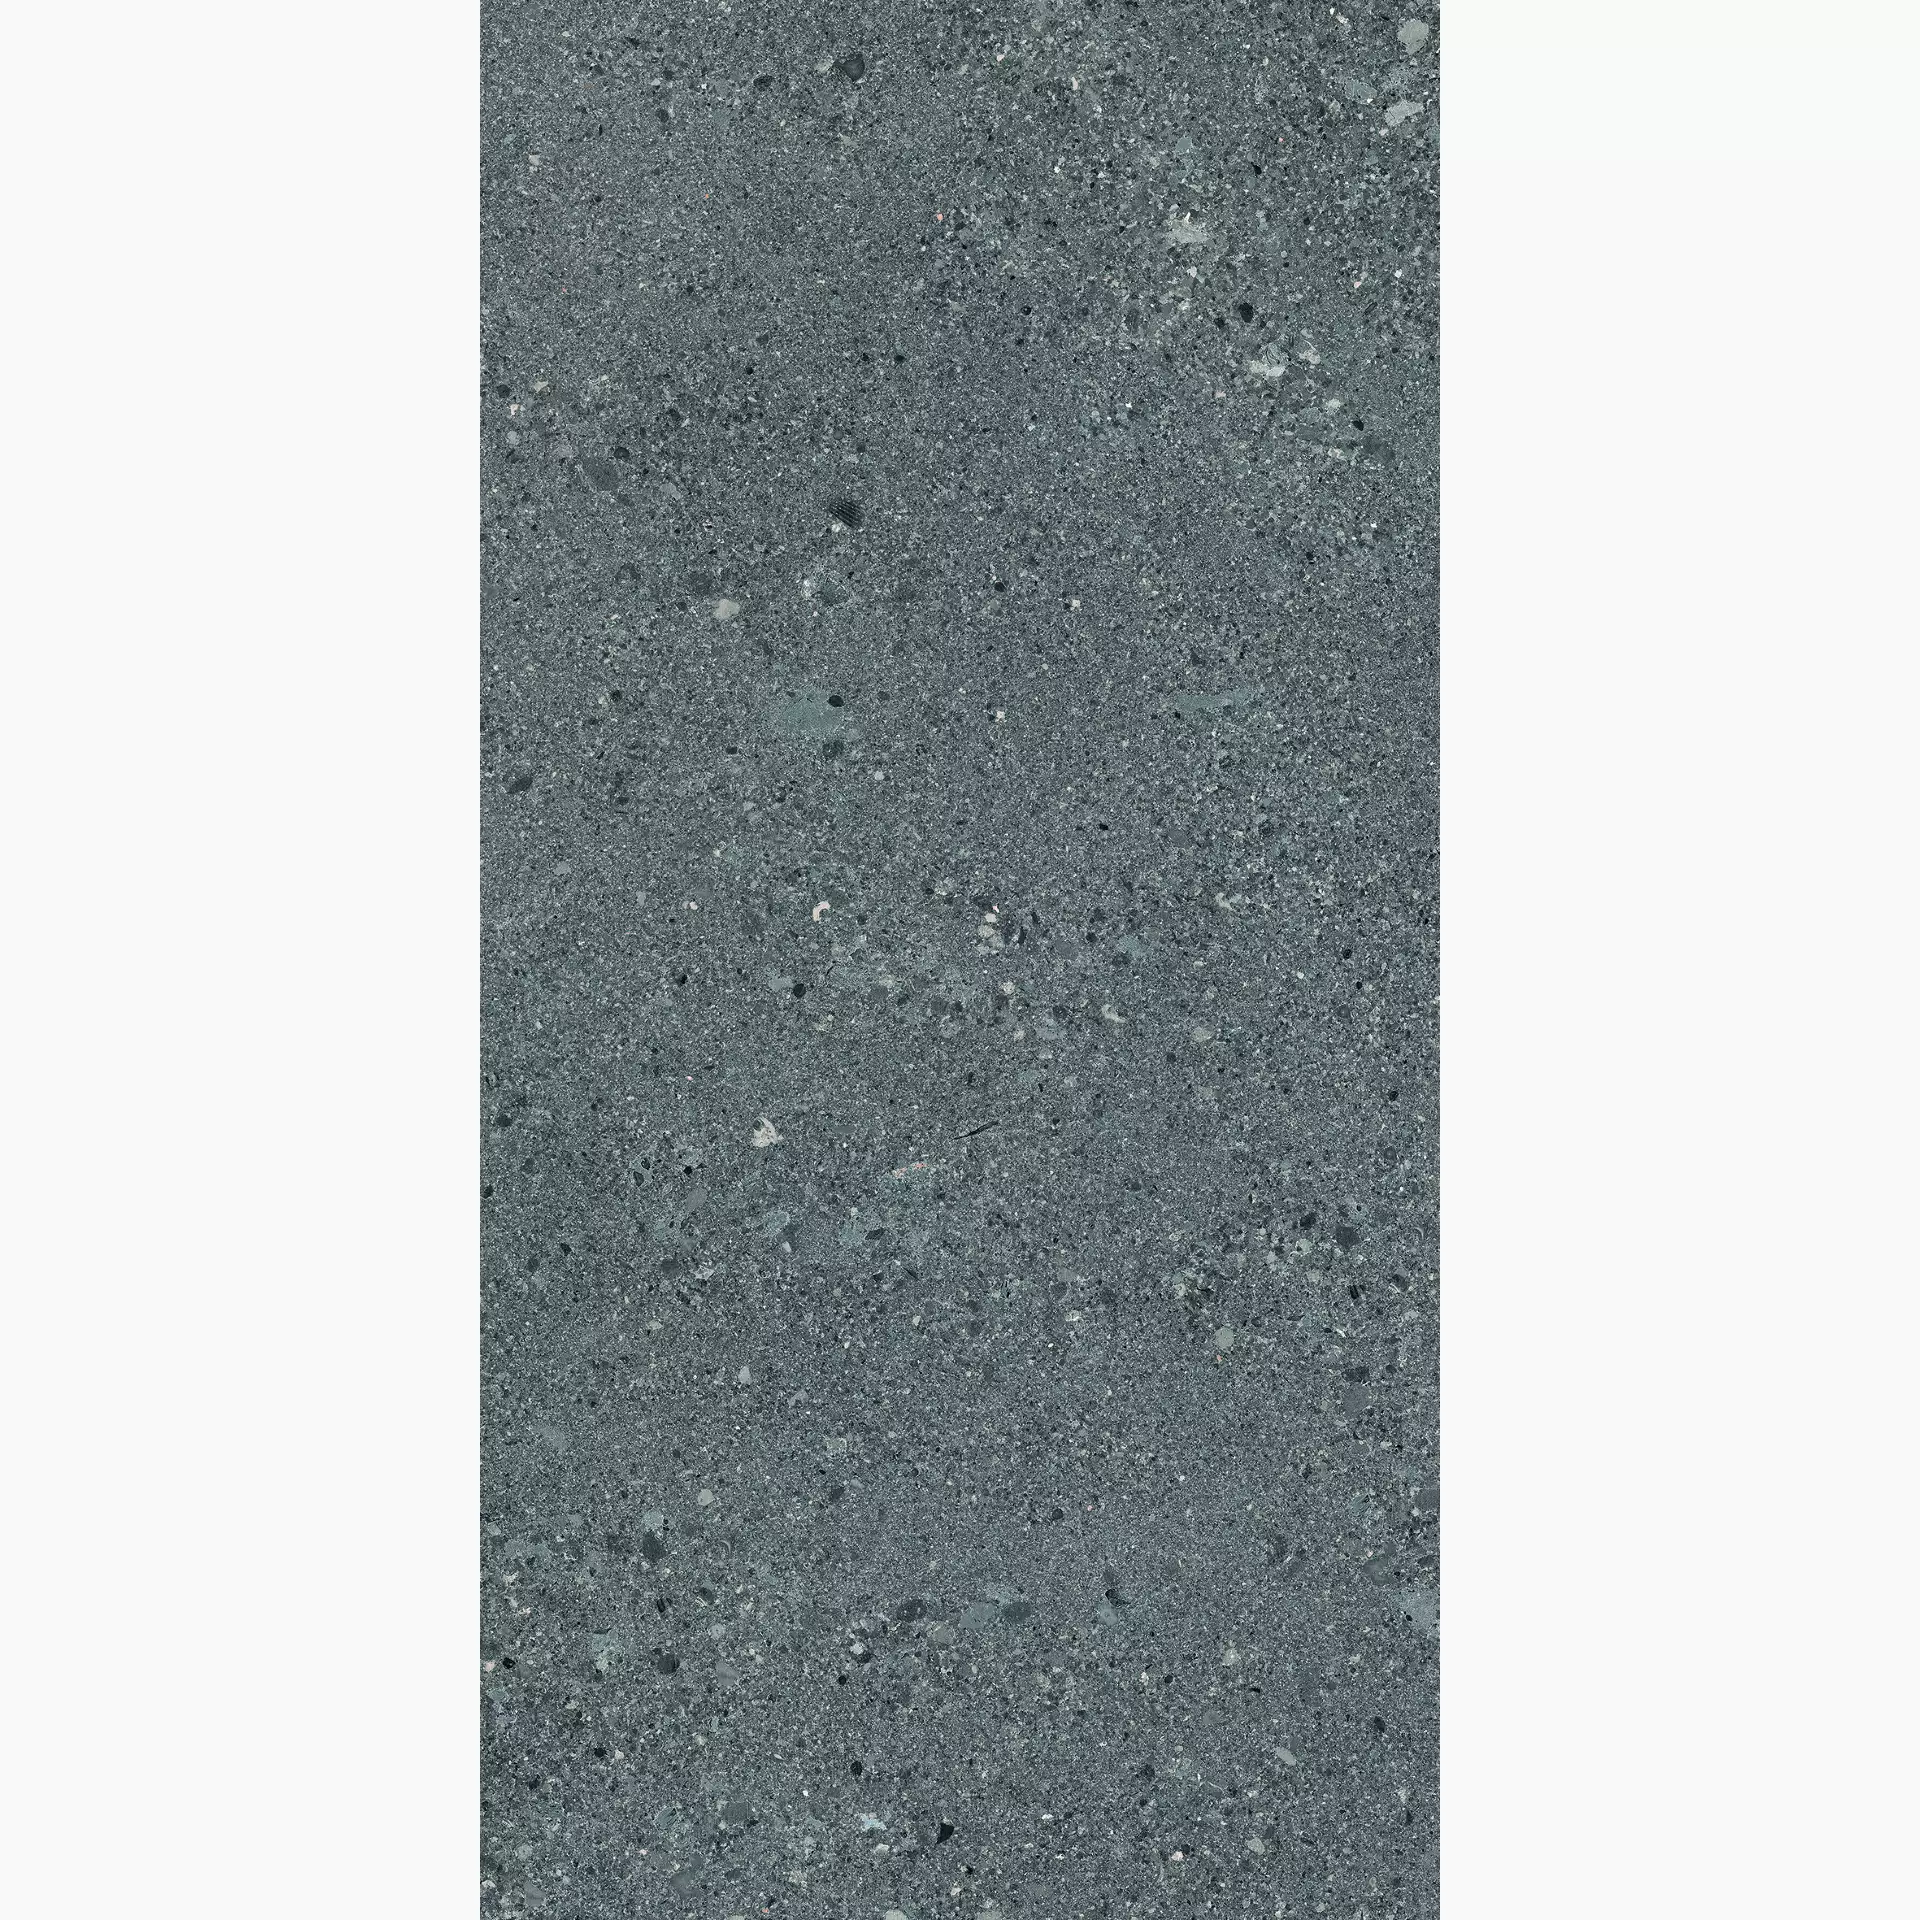 Ergon Grain Stone Rough Grain Dark Naturale E0CQ 30x60cm rectified 9,5mm